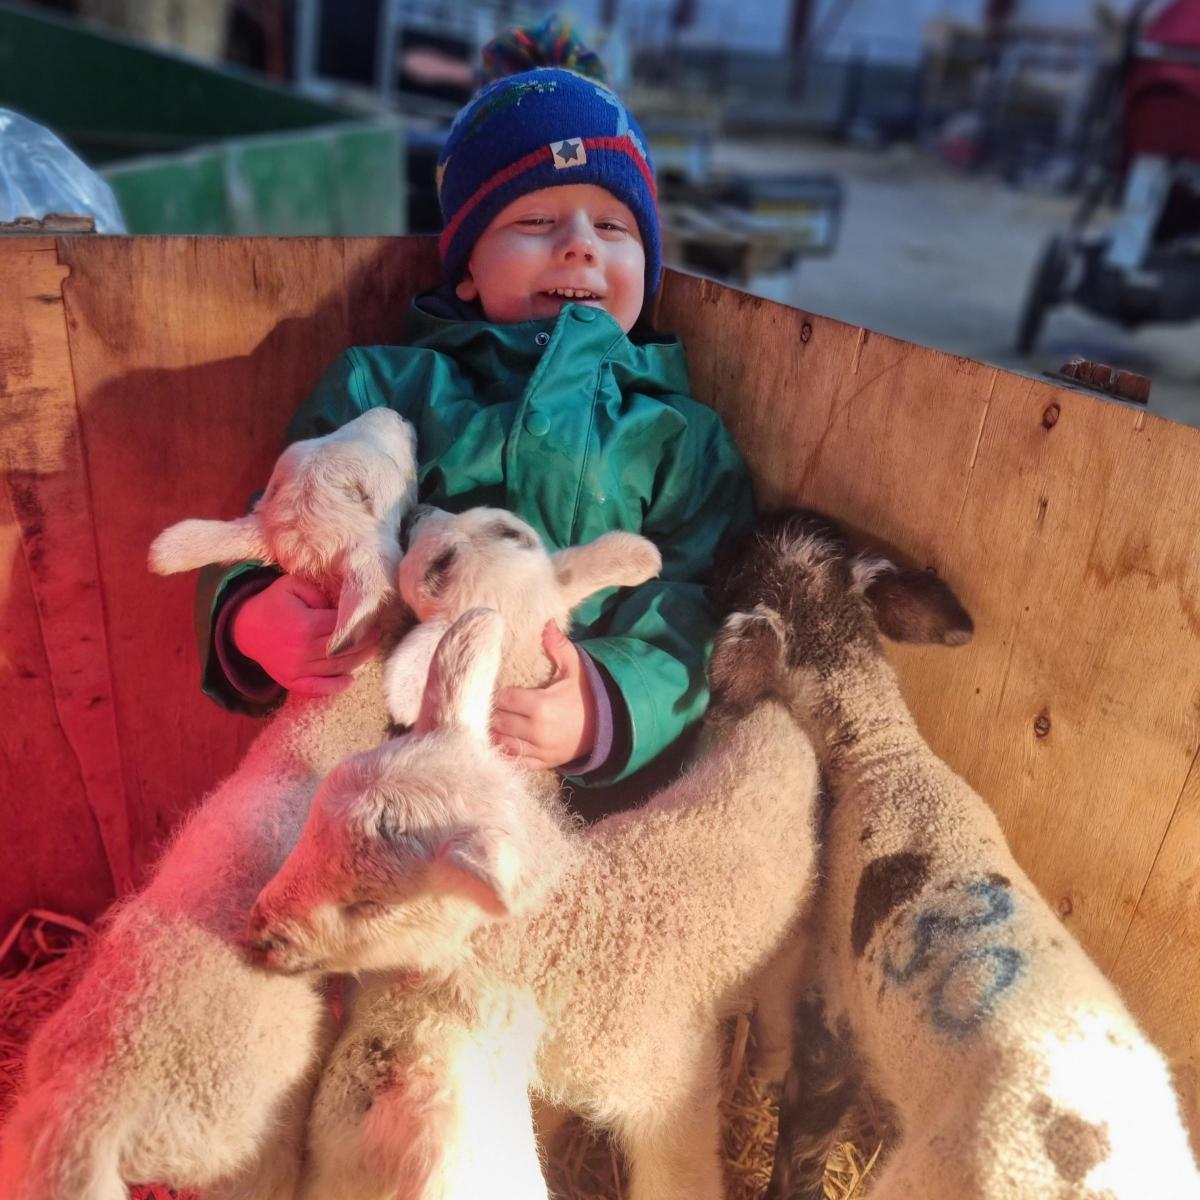 Amy-Ross Henderson - My son Joe loving all the lamb attention at Grandpa's farm